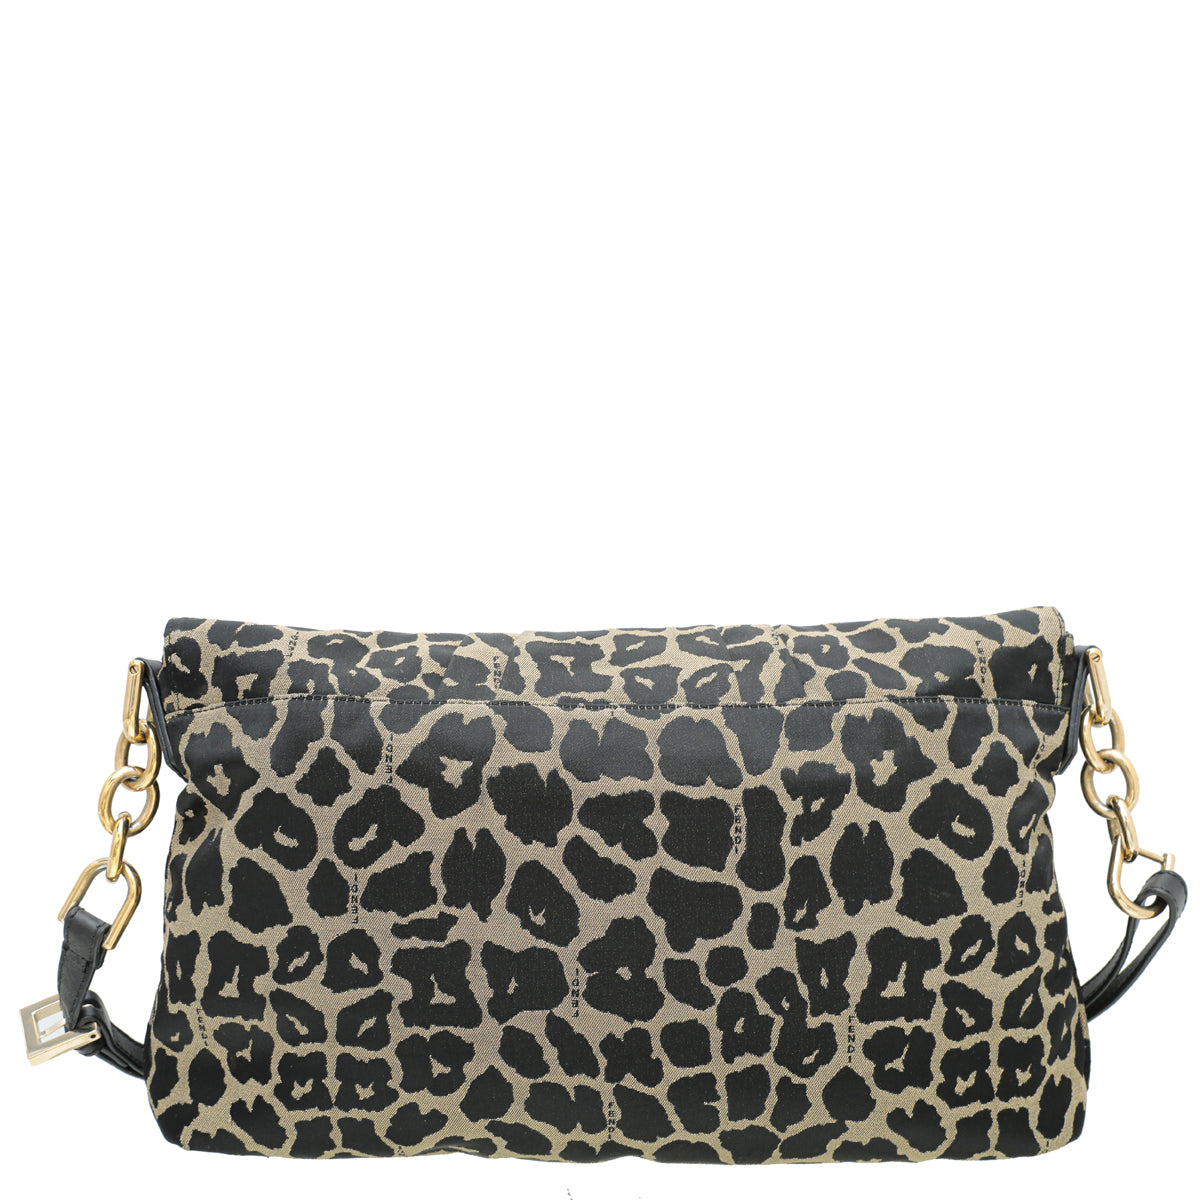 Fendi Bicolor Leopard Print Mia Large Flap Bag